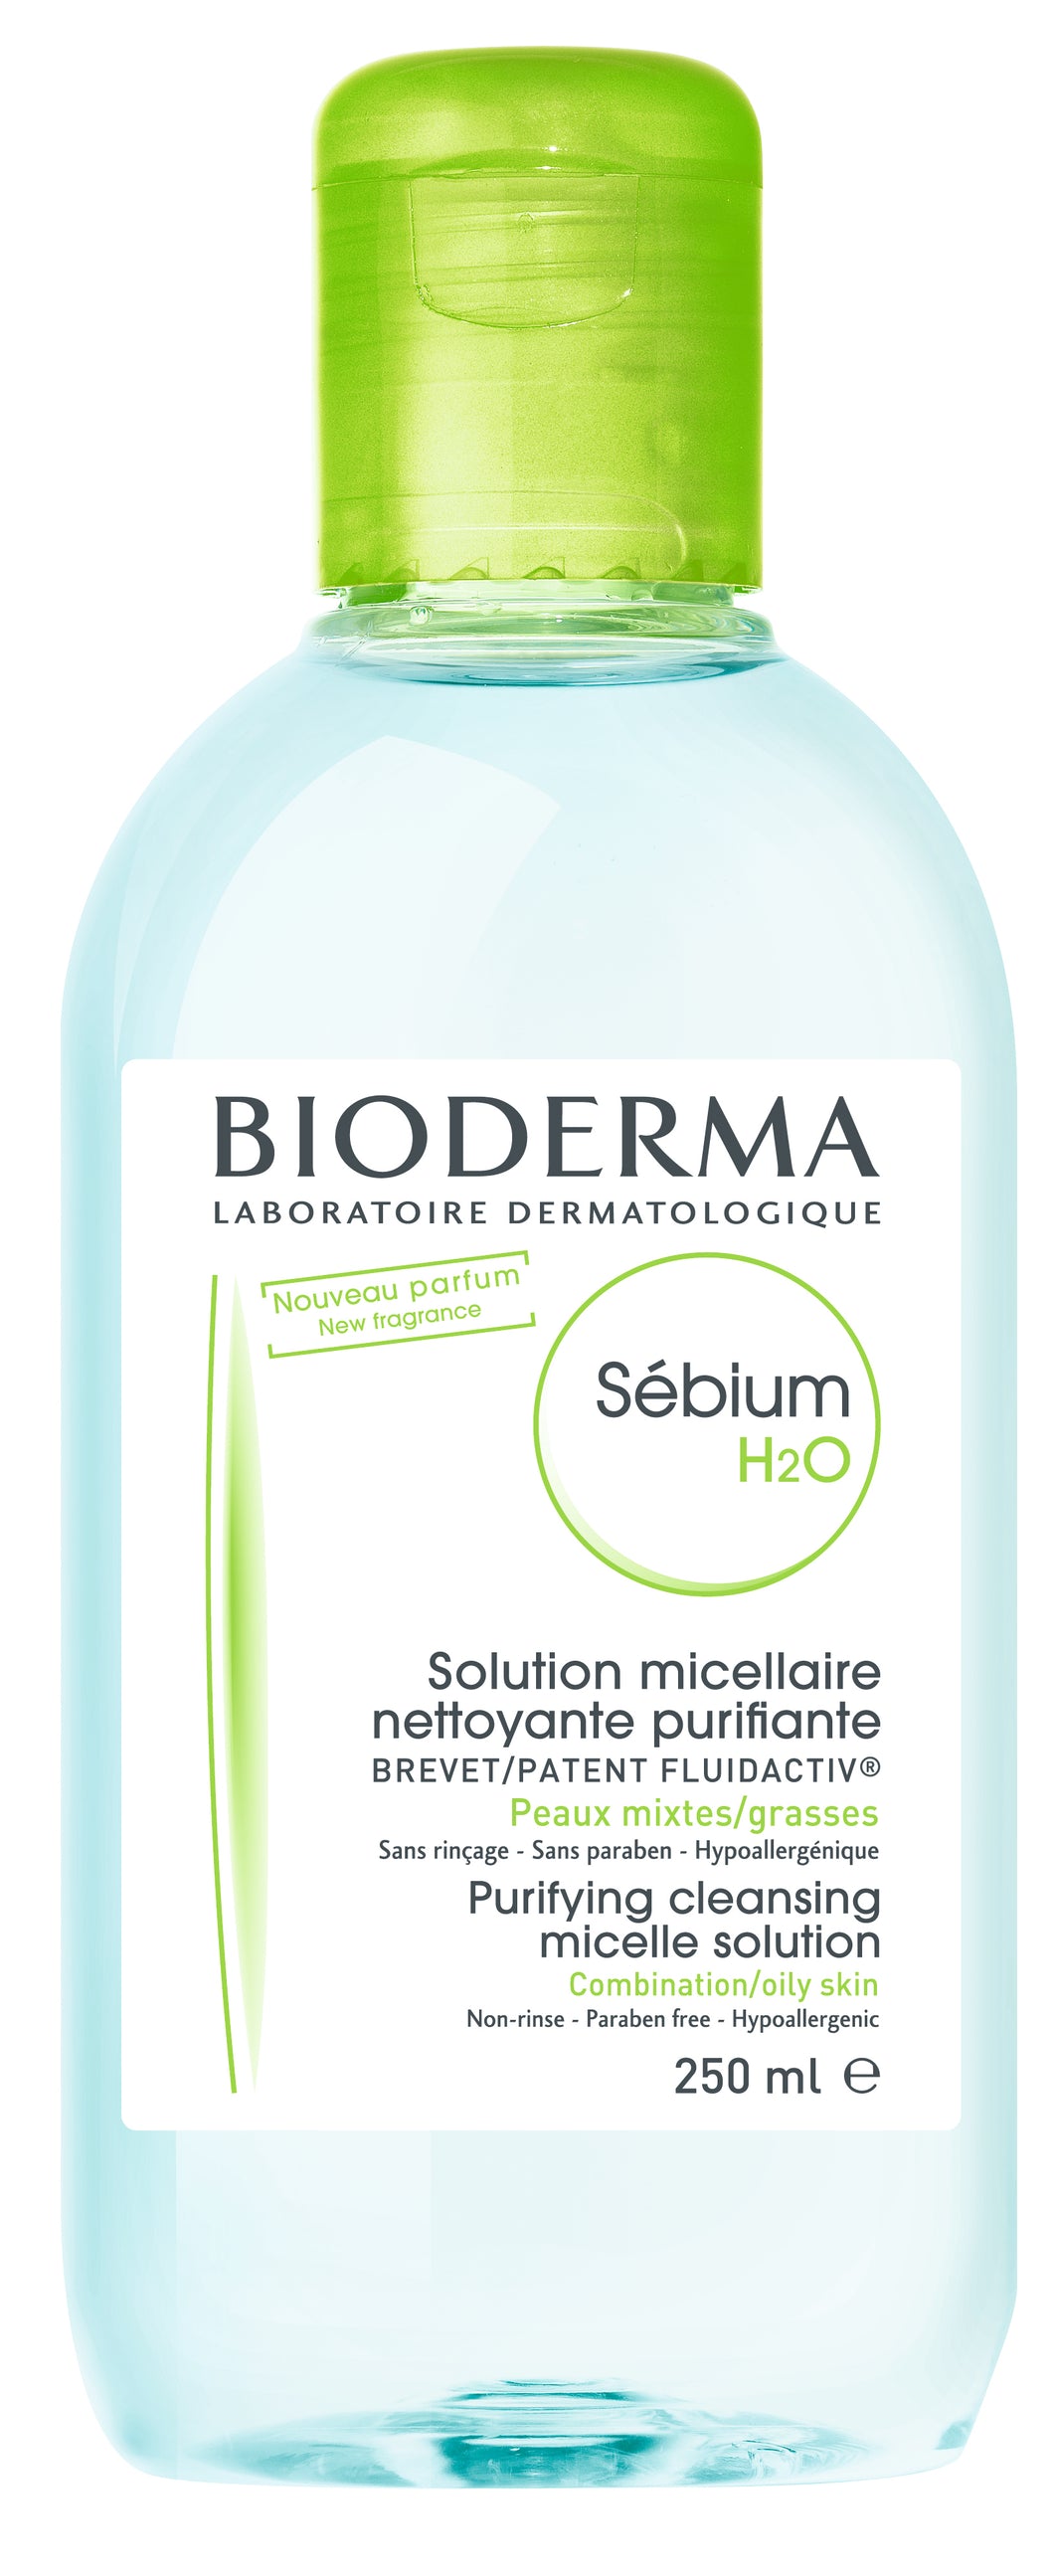 Bioderma Sébium H2O arc- és sminklemosó 250 ml